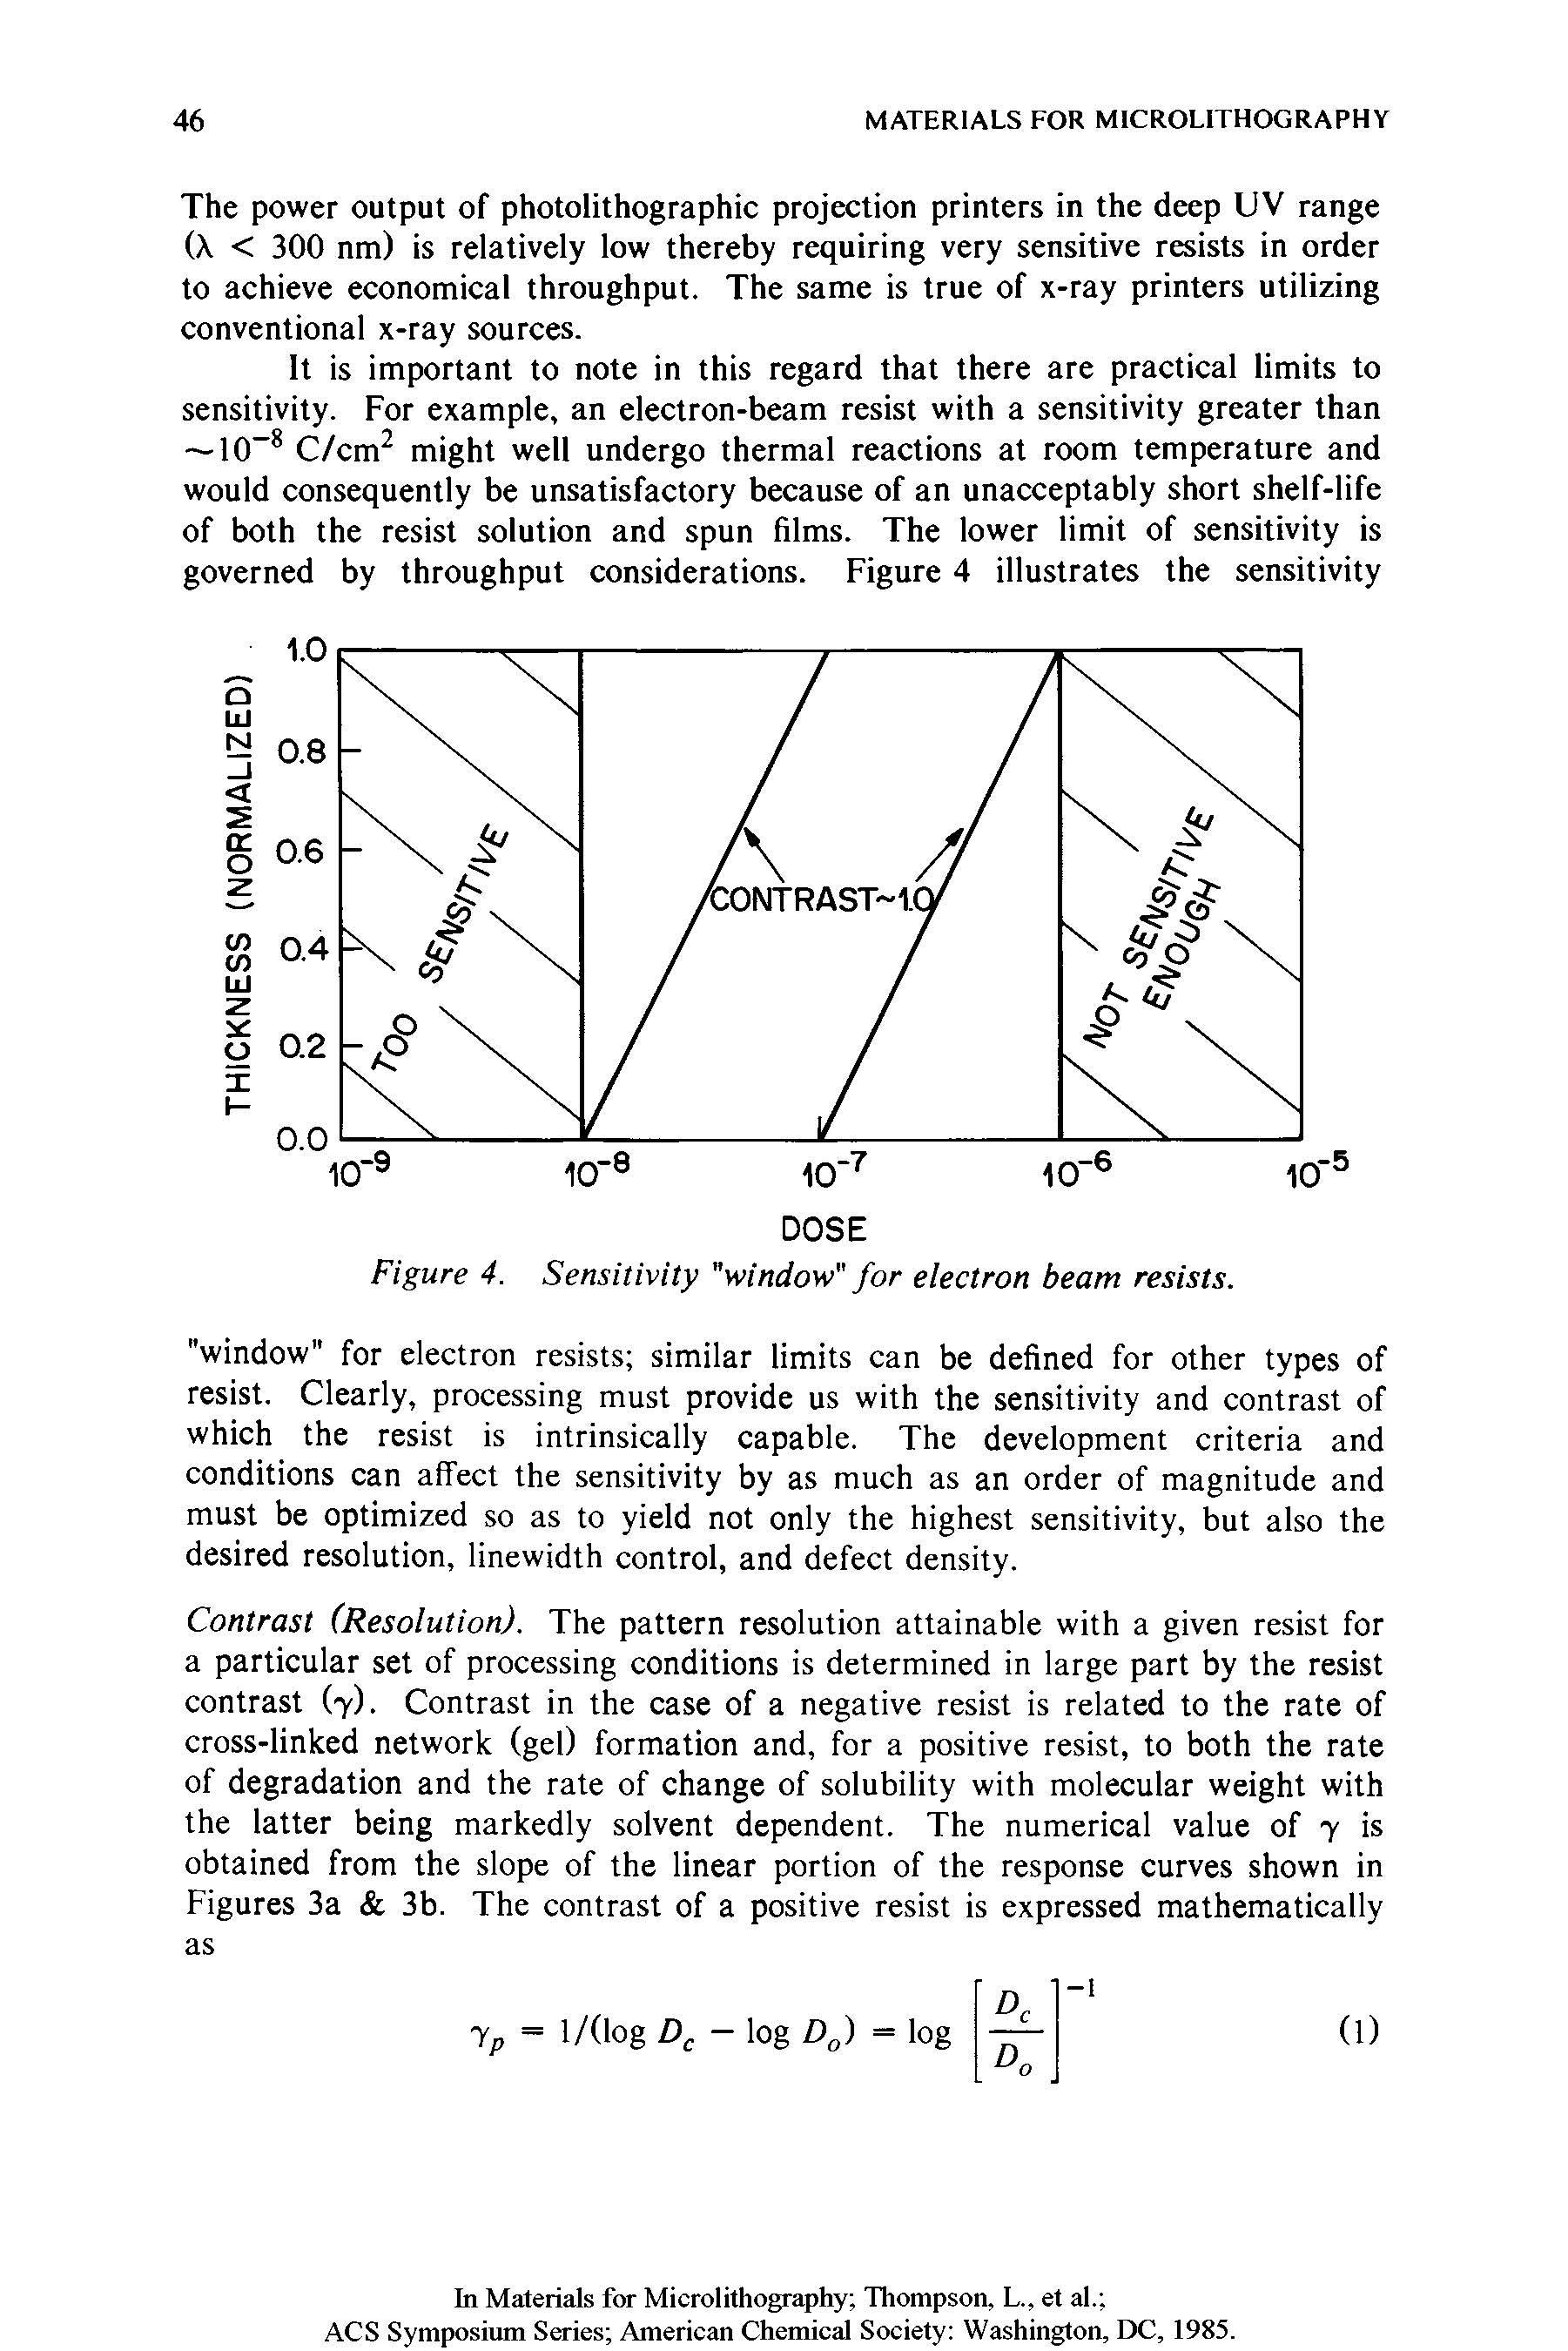 Figure 4. Sensitivity "window" for electron beam resists.